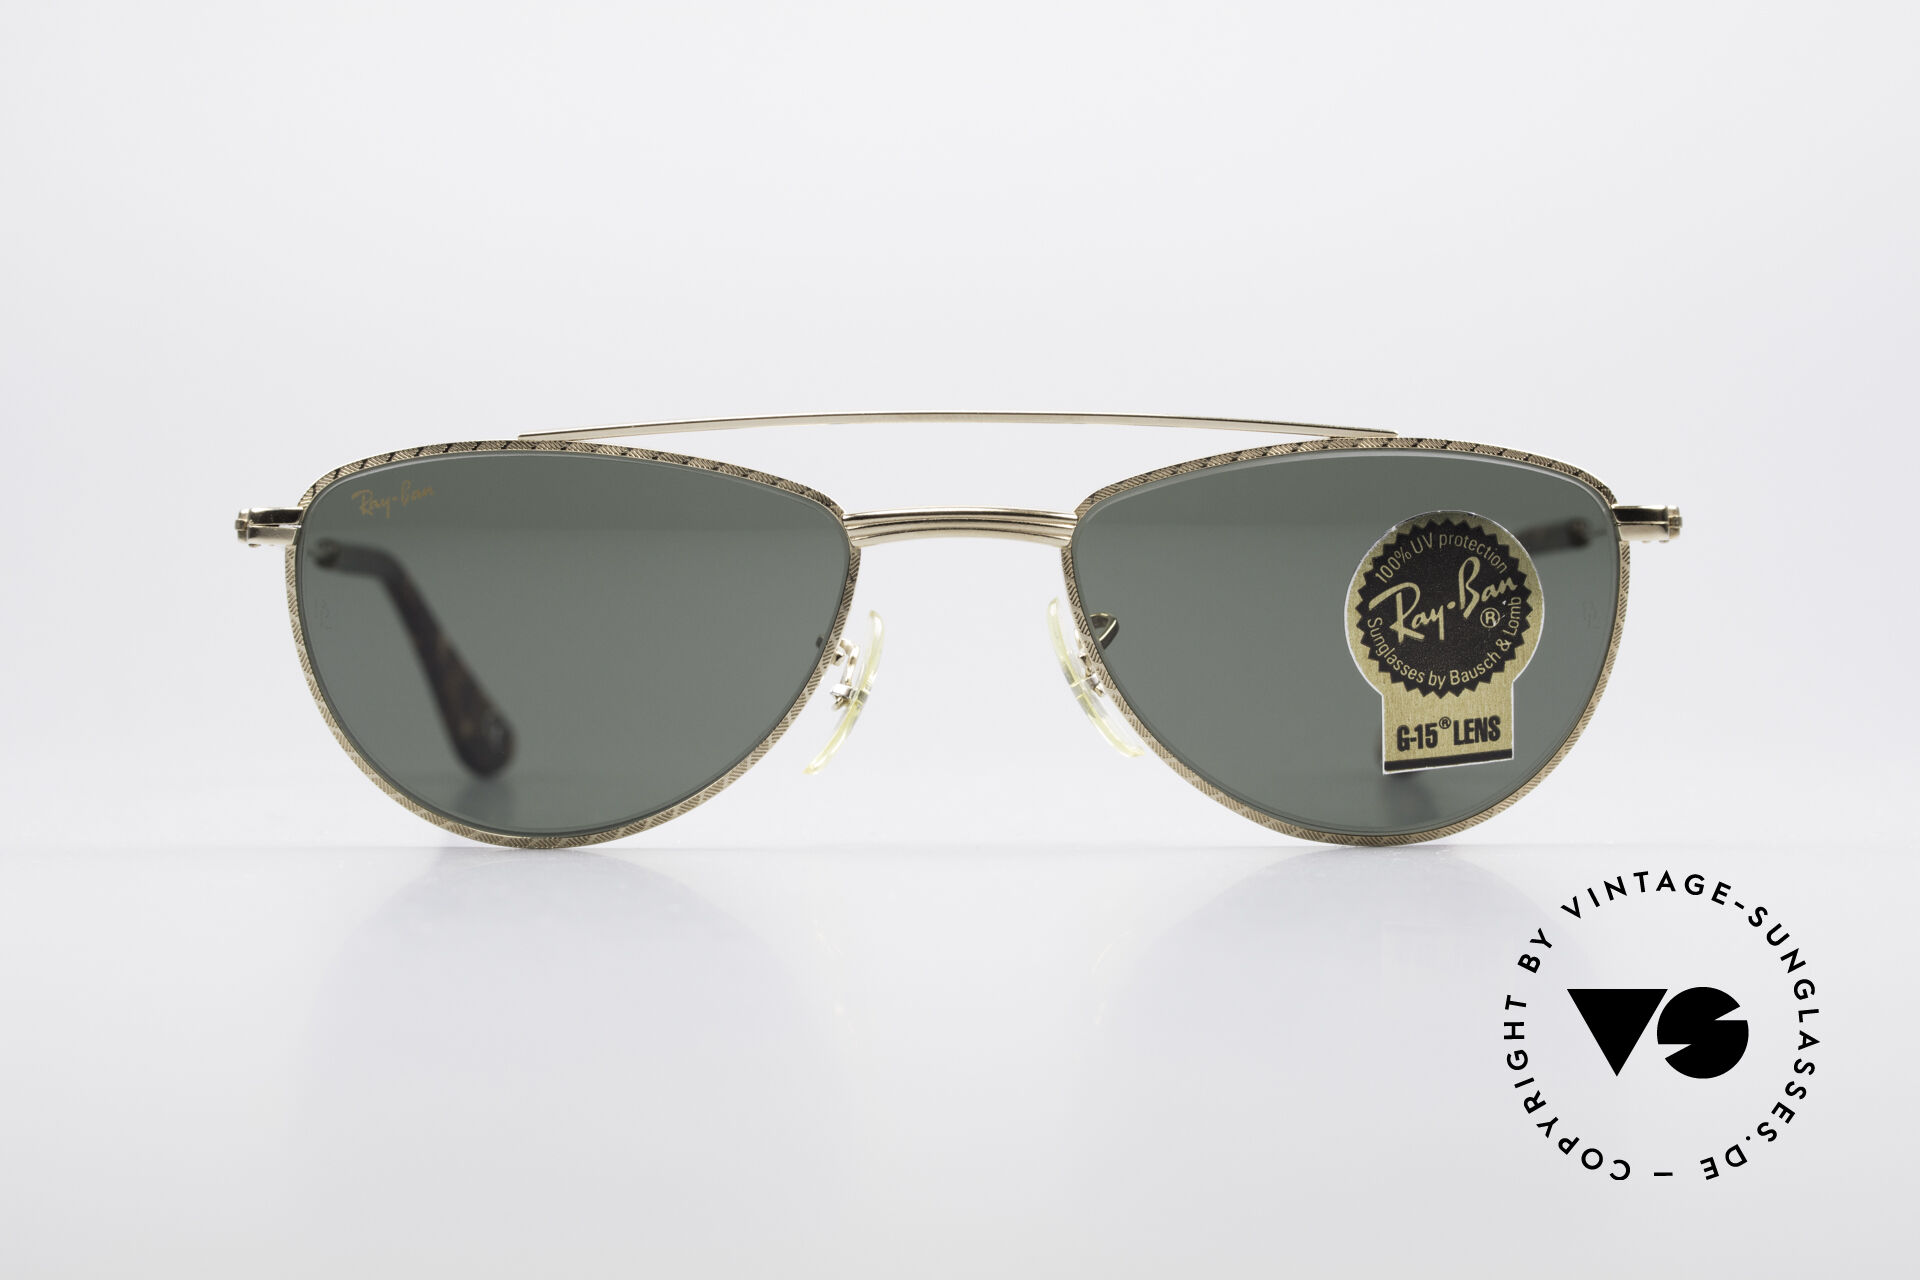 Sunglasses Ray Ban 1940's Retro Aviator Old Bausch&Lomb Ray-Ban USA